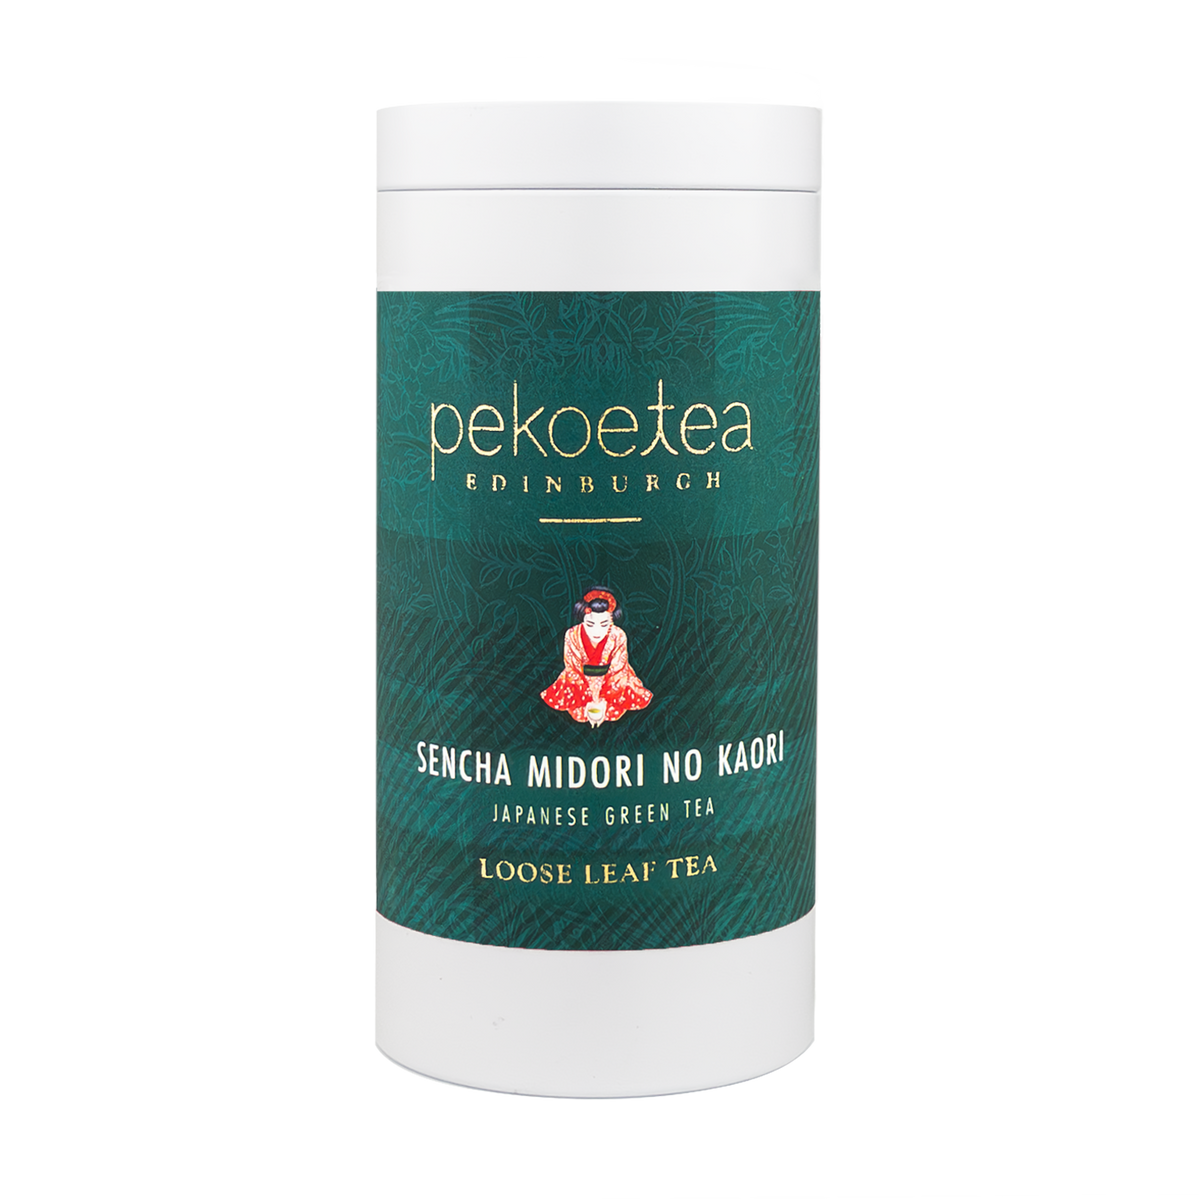 PekoeTea Edinburgh Tea Caddy Sencha Midori No Kaori Japanese Green Tea